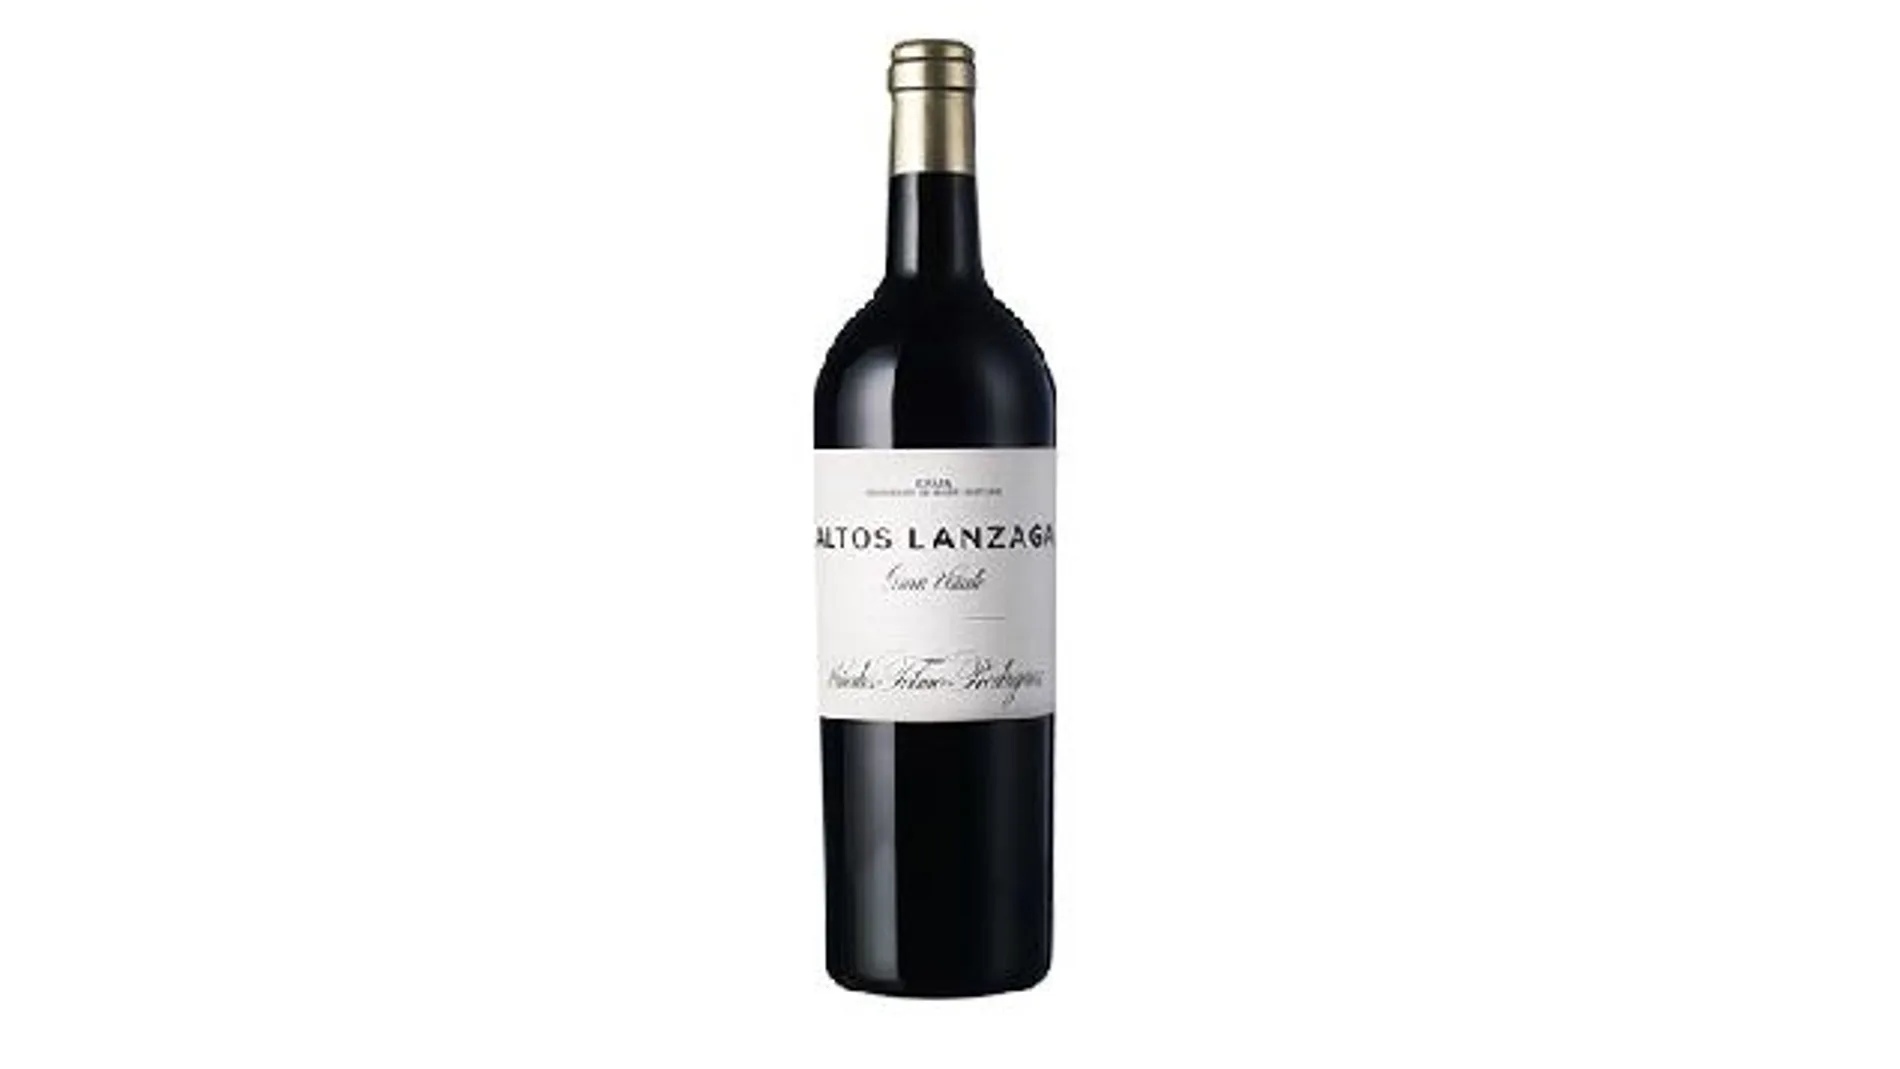 Vinos naturales: Gran Rioja